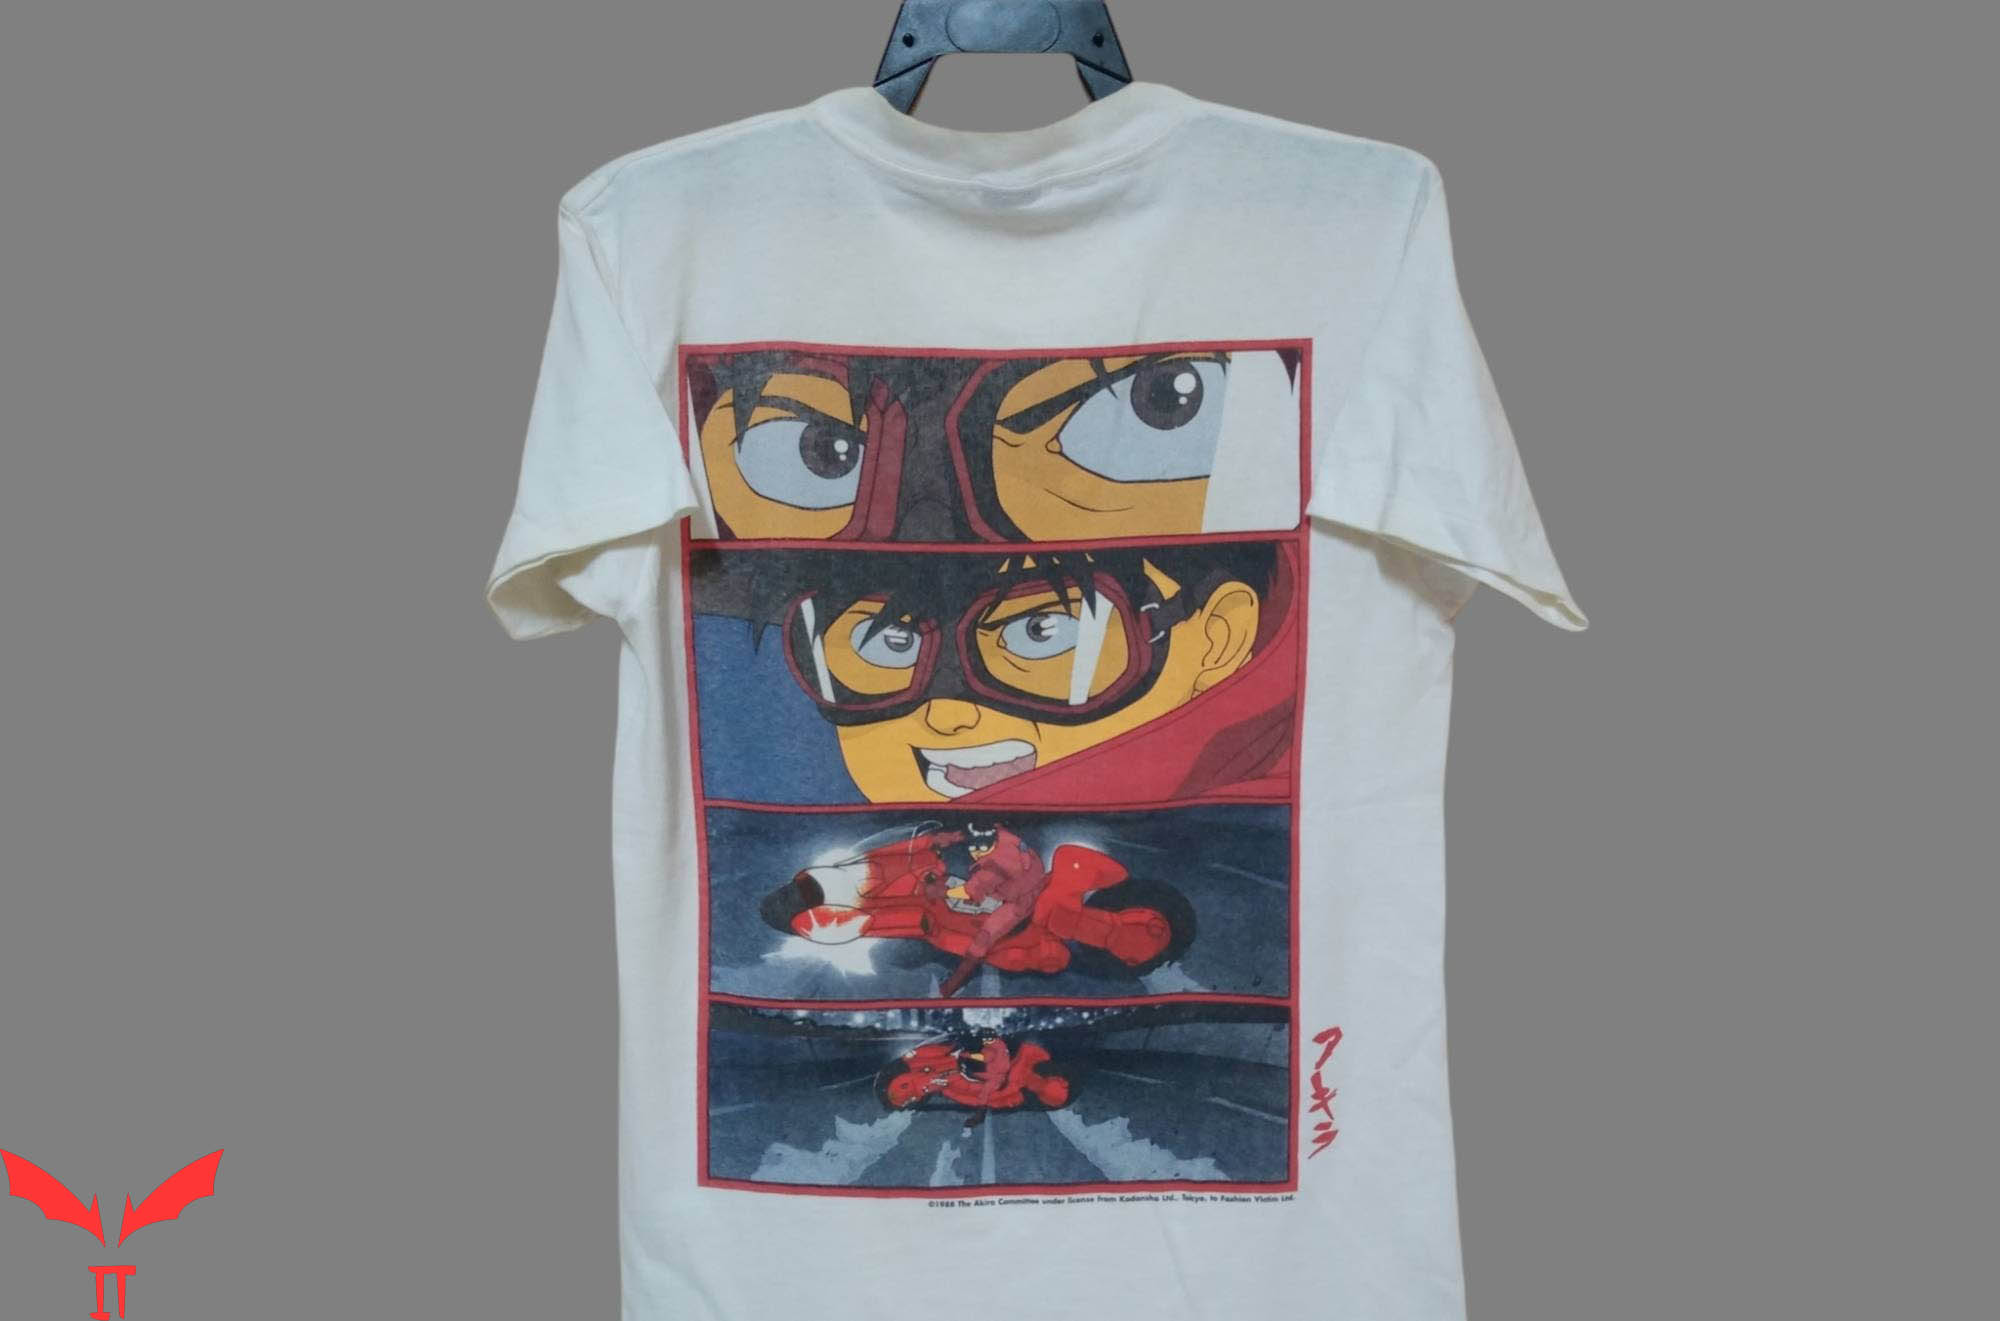 Akira Vintage T-Shirt 90's Anime Kaneda Tetsuo Japanese